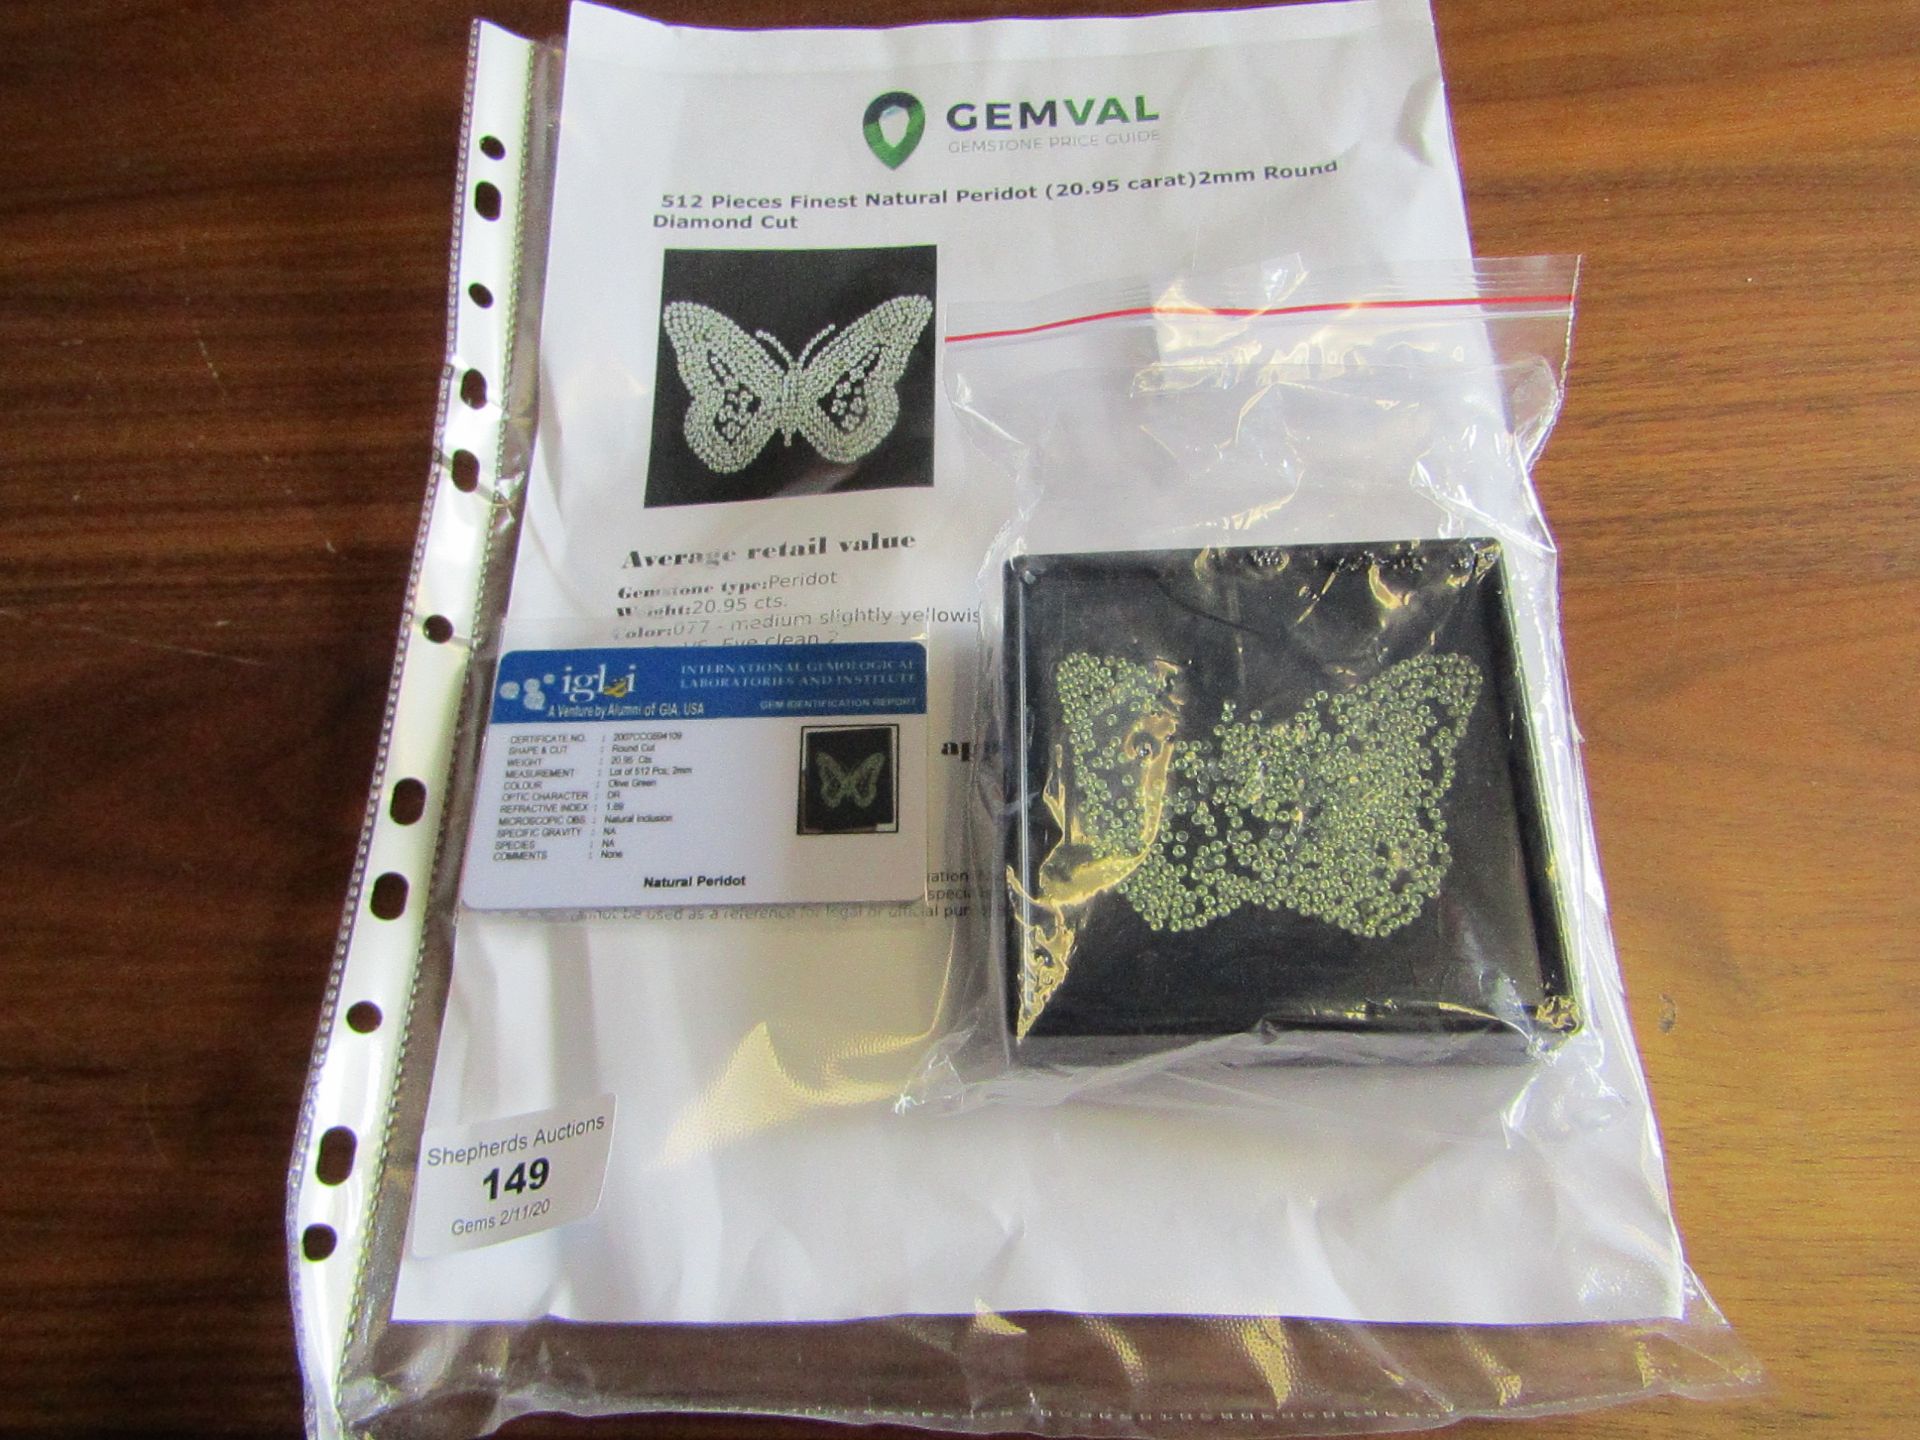 Natural Peridot - 20.95 Carats - 512 pieces - average retail value £ 4,713.44 - Image 2 of 2